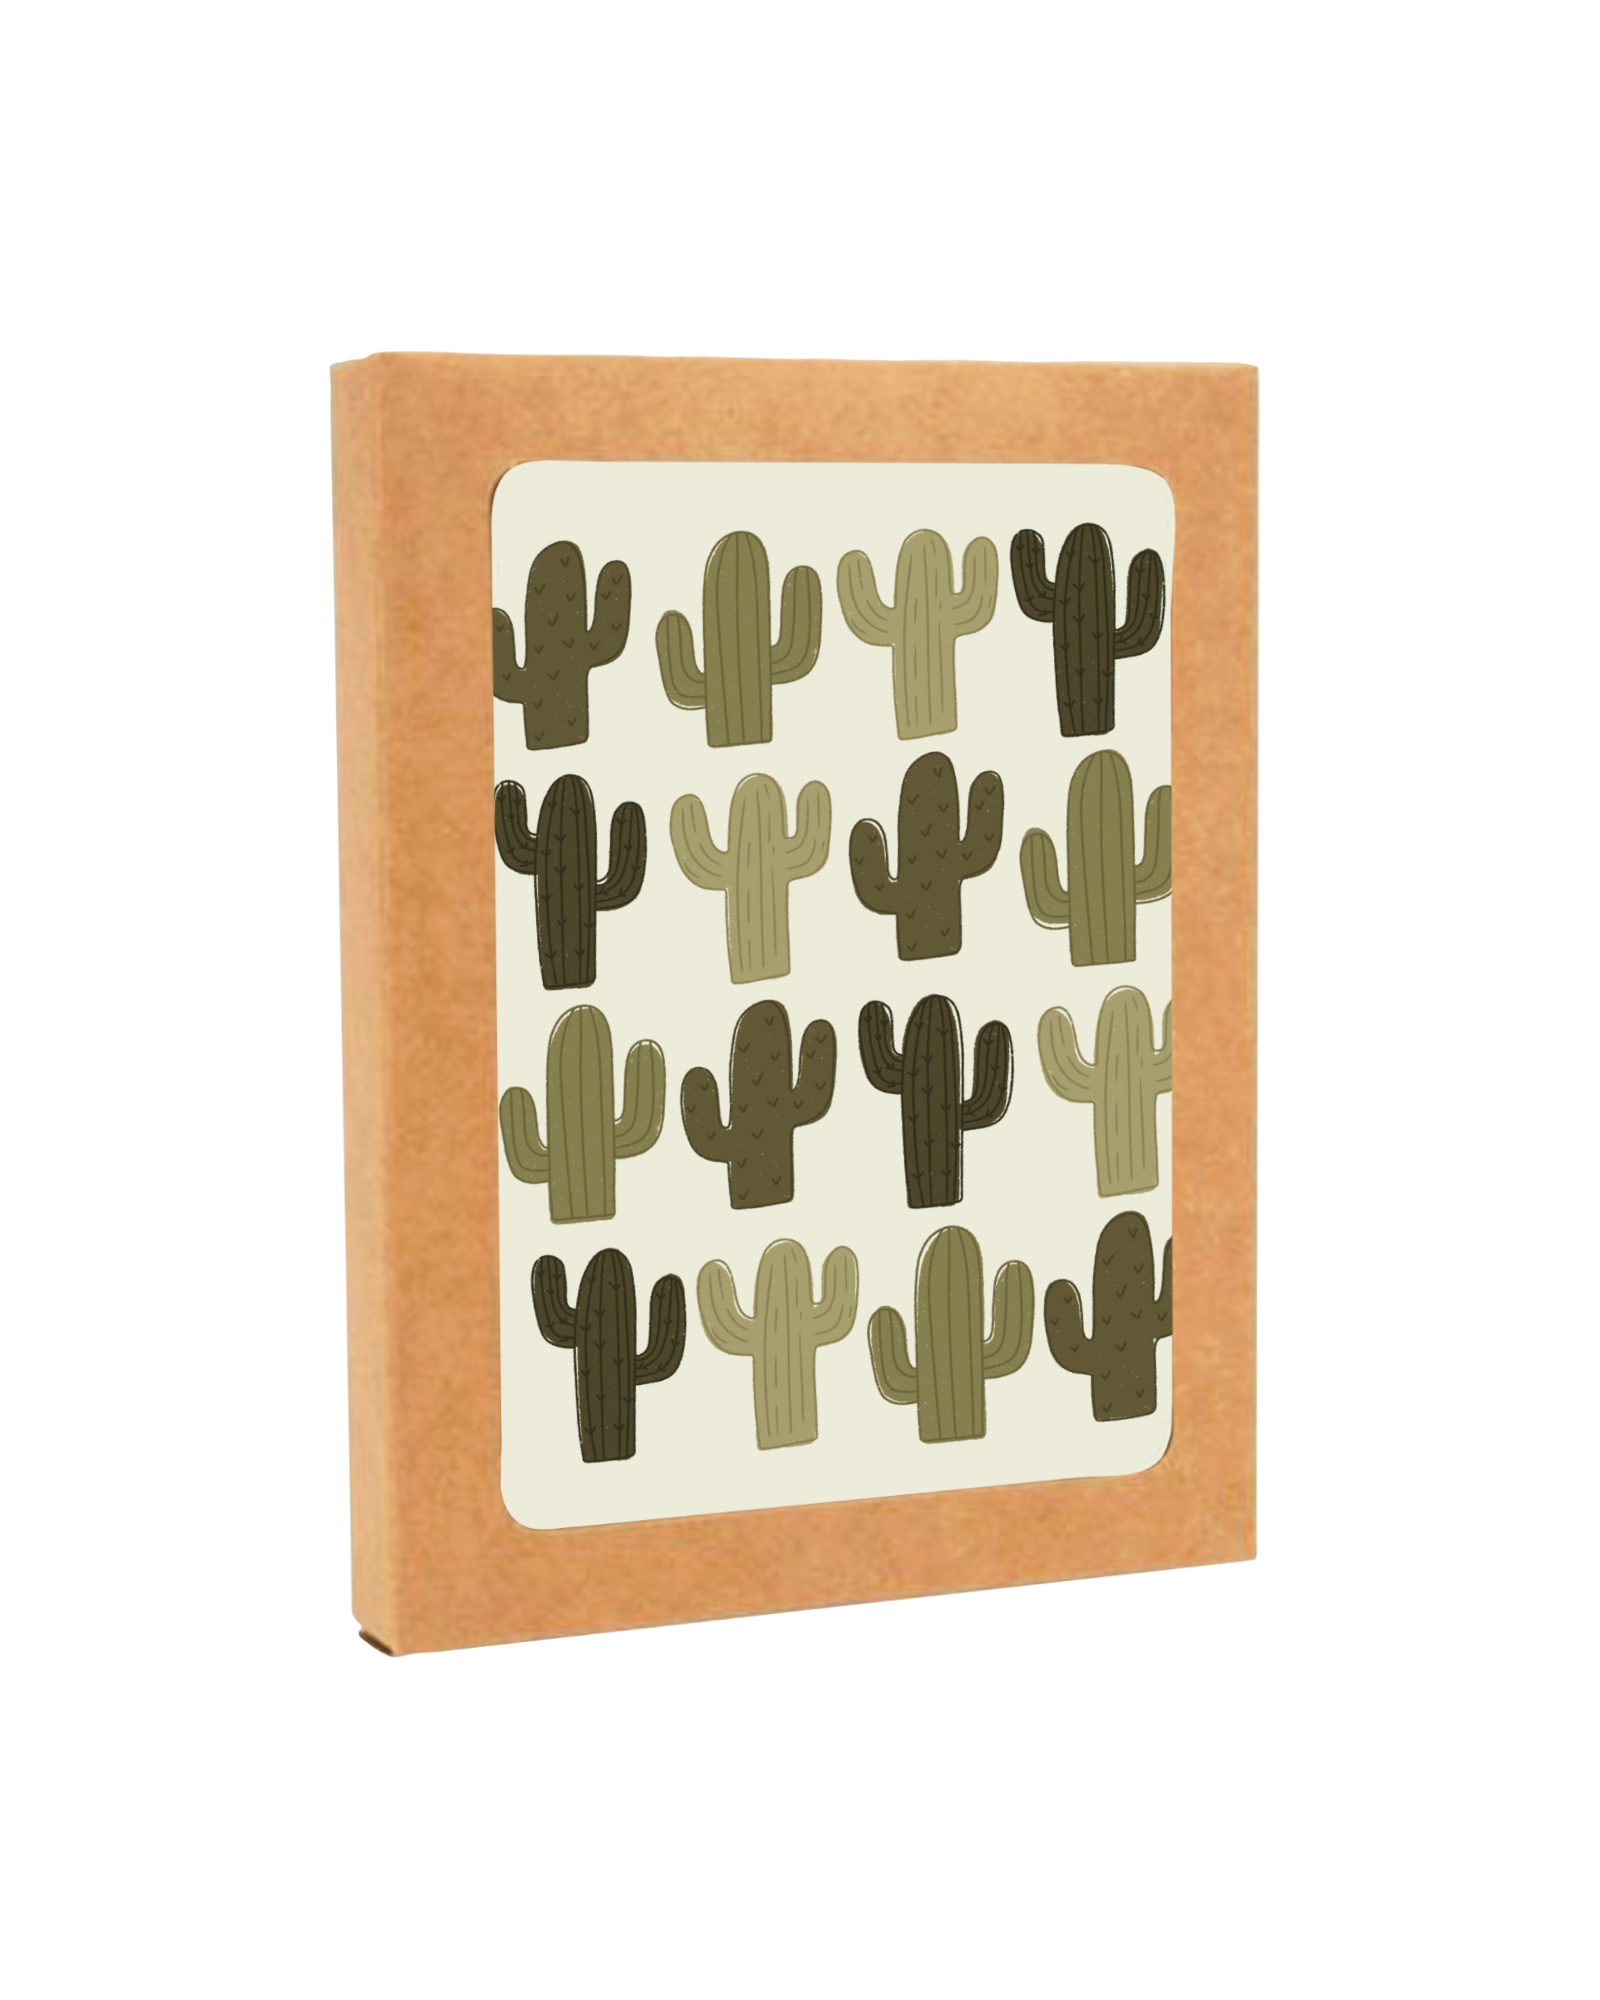 16 Cacti Greeting Card Box Set of 8